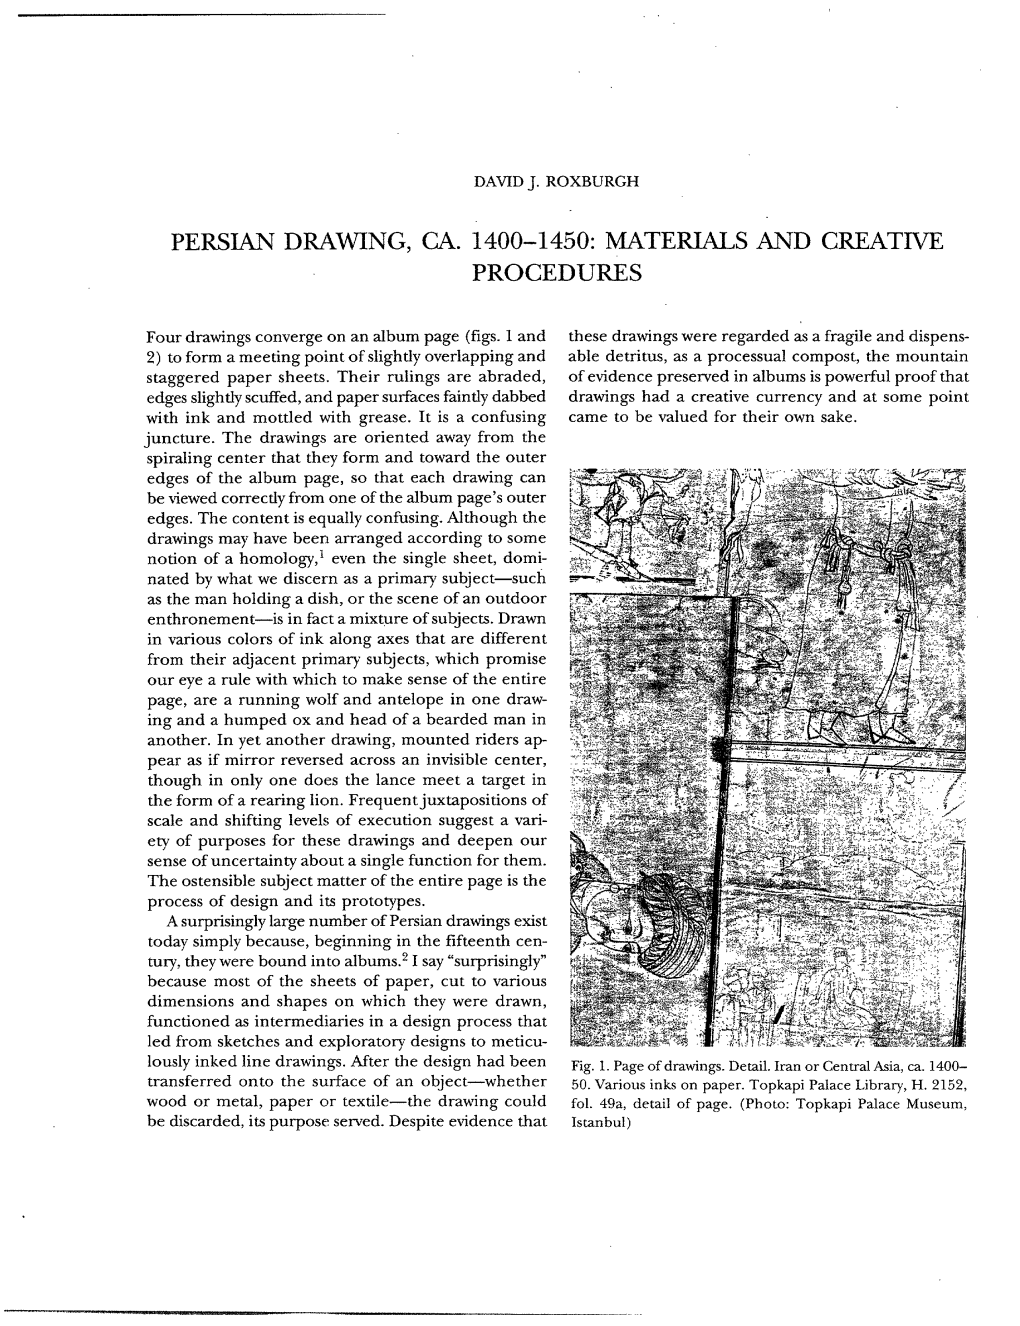 Persian Drawing, Ca. 1400-1450: Materials and Creative Procedures